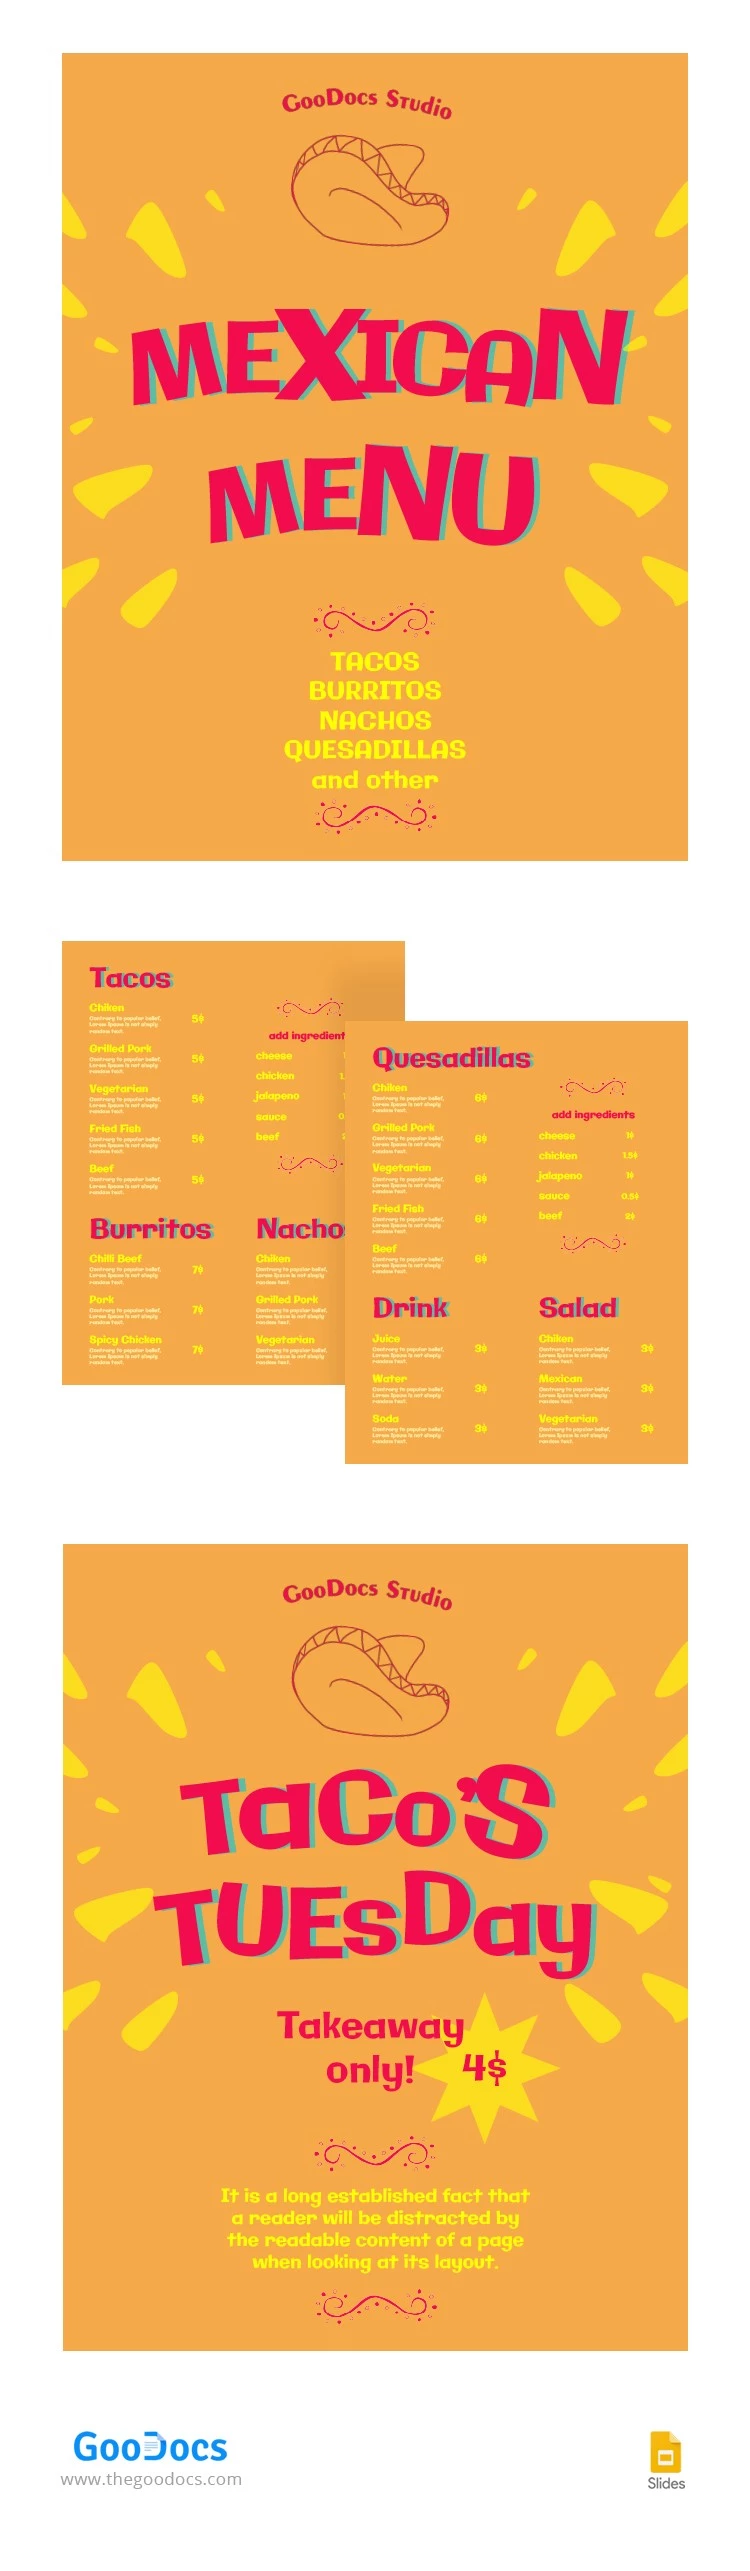 Menu du restaurant mexicain Orange - free Google Docs Template - 10064711